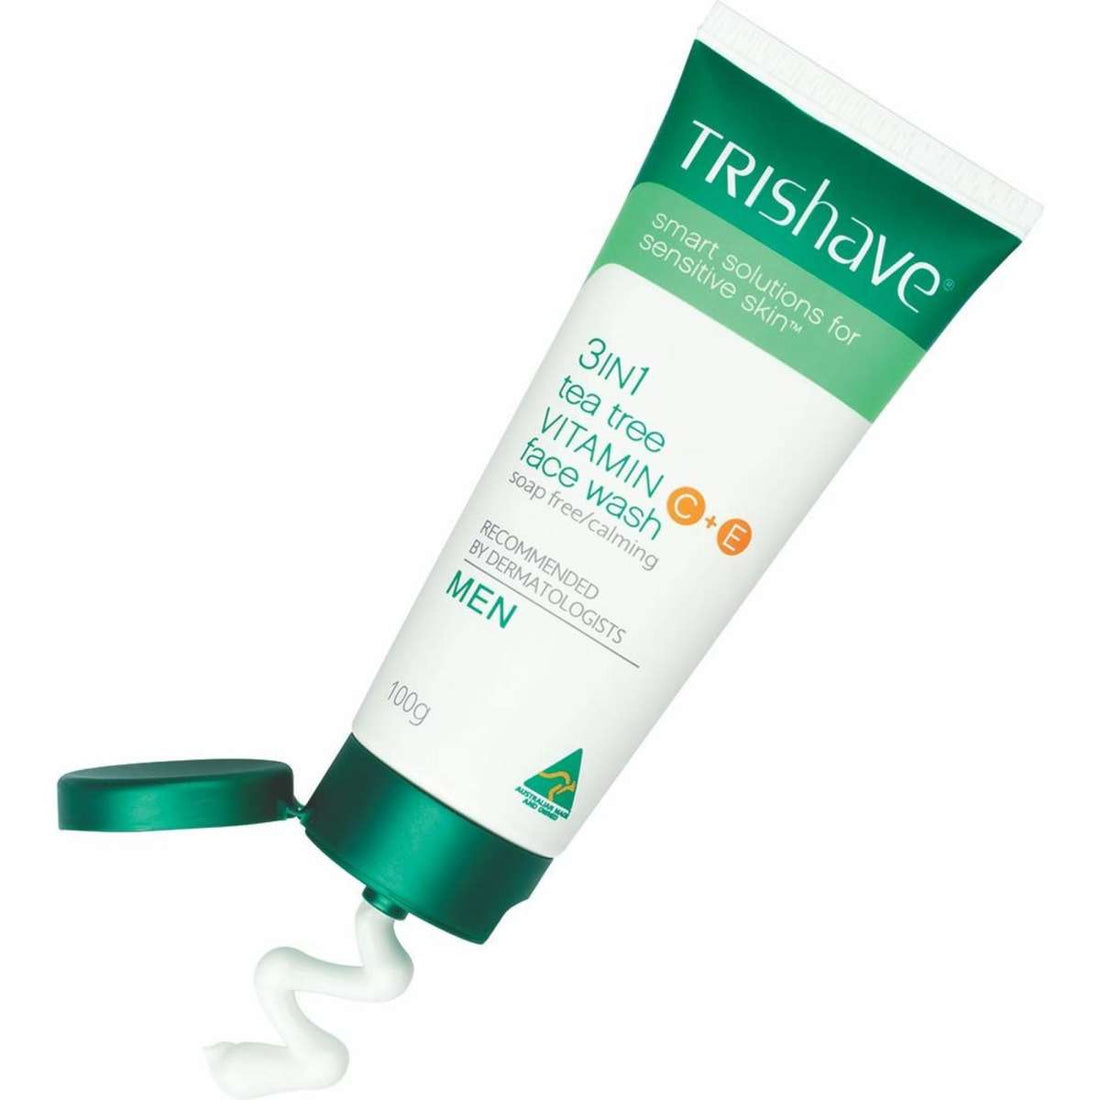 TriShave Tree Vitamin Face Wash Men 2 Pack 200g